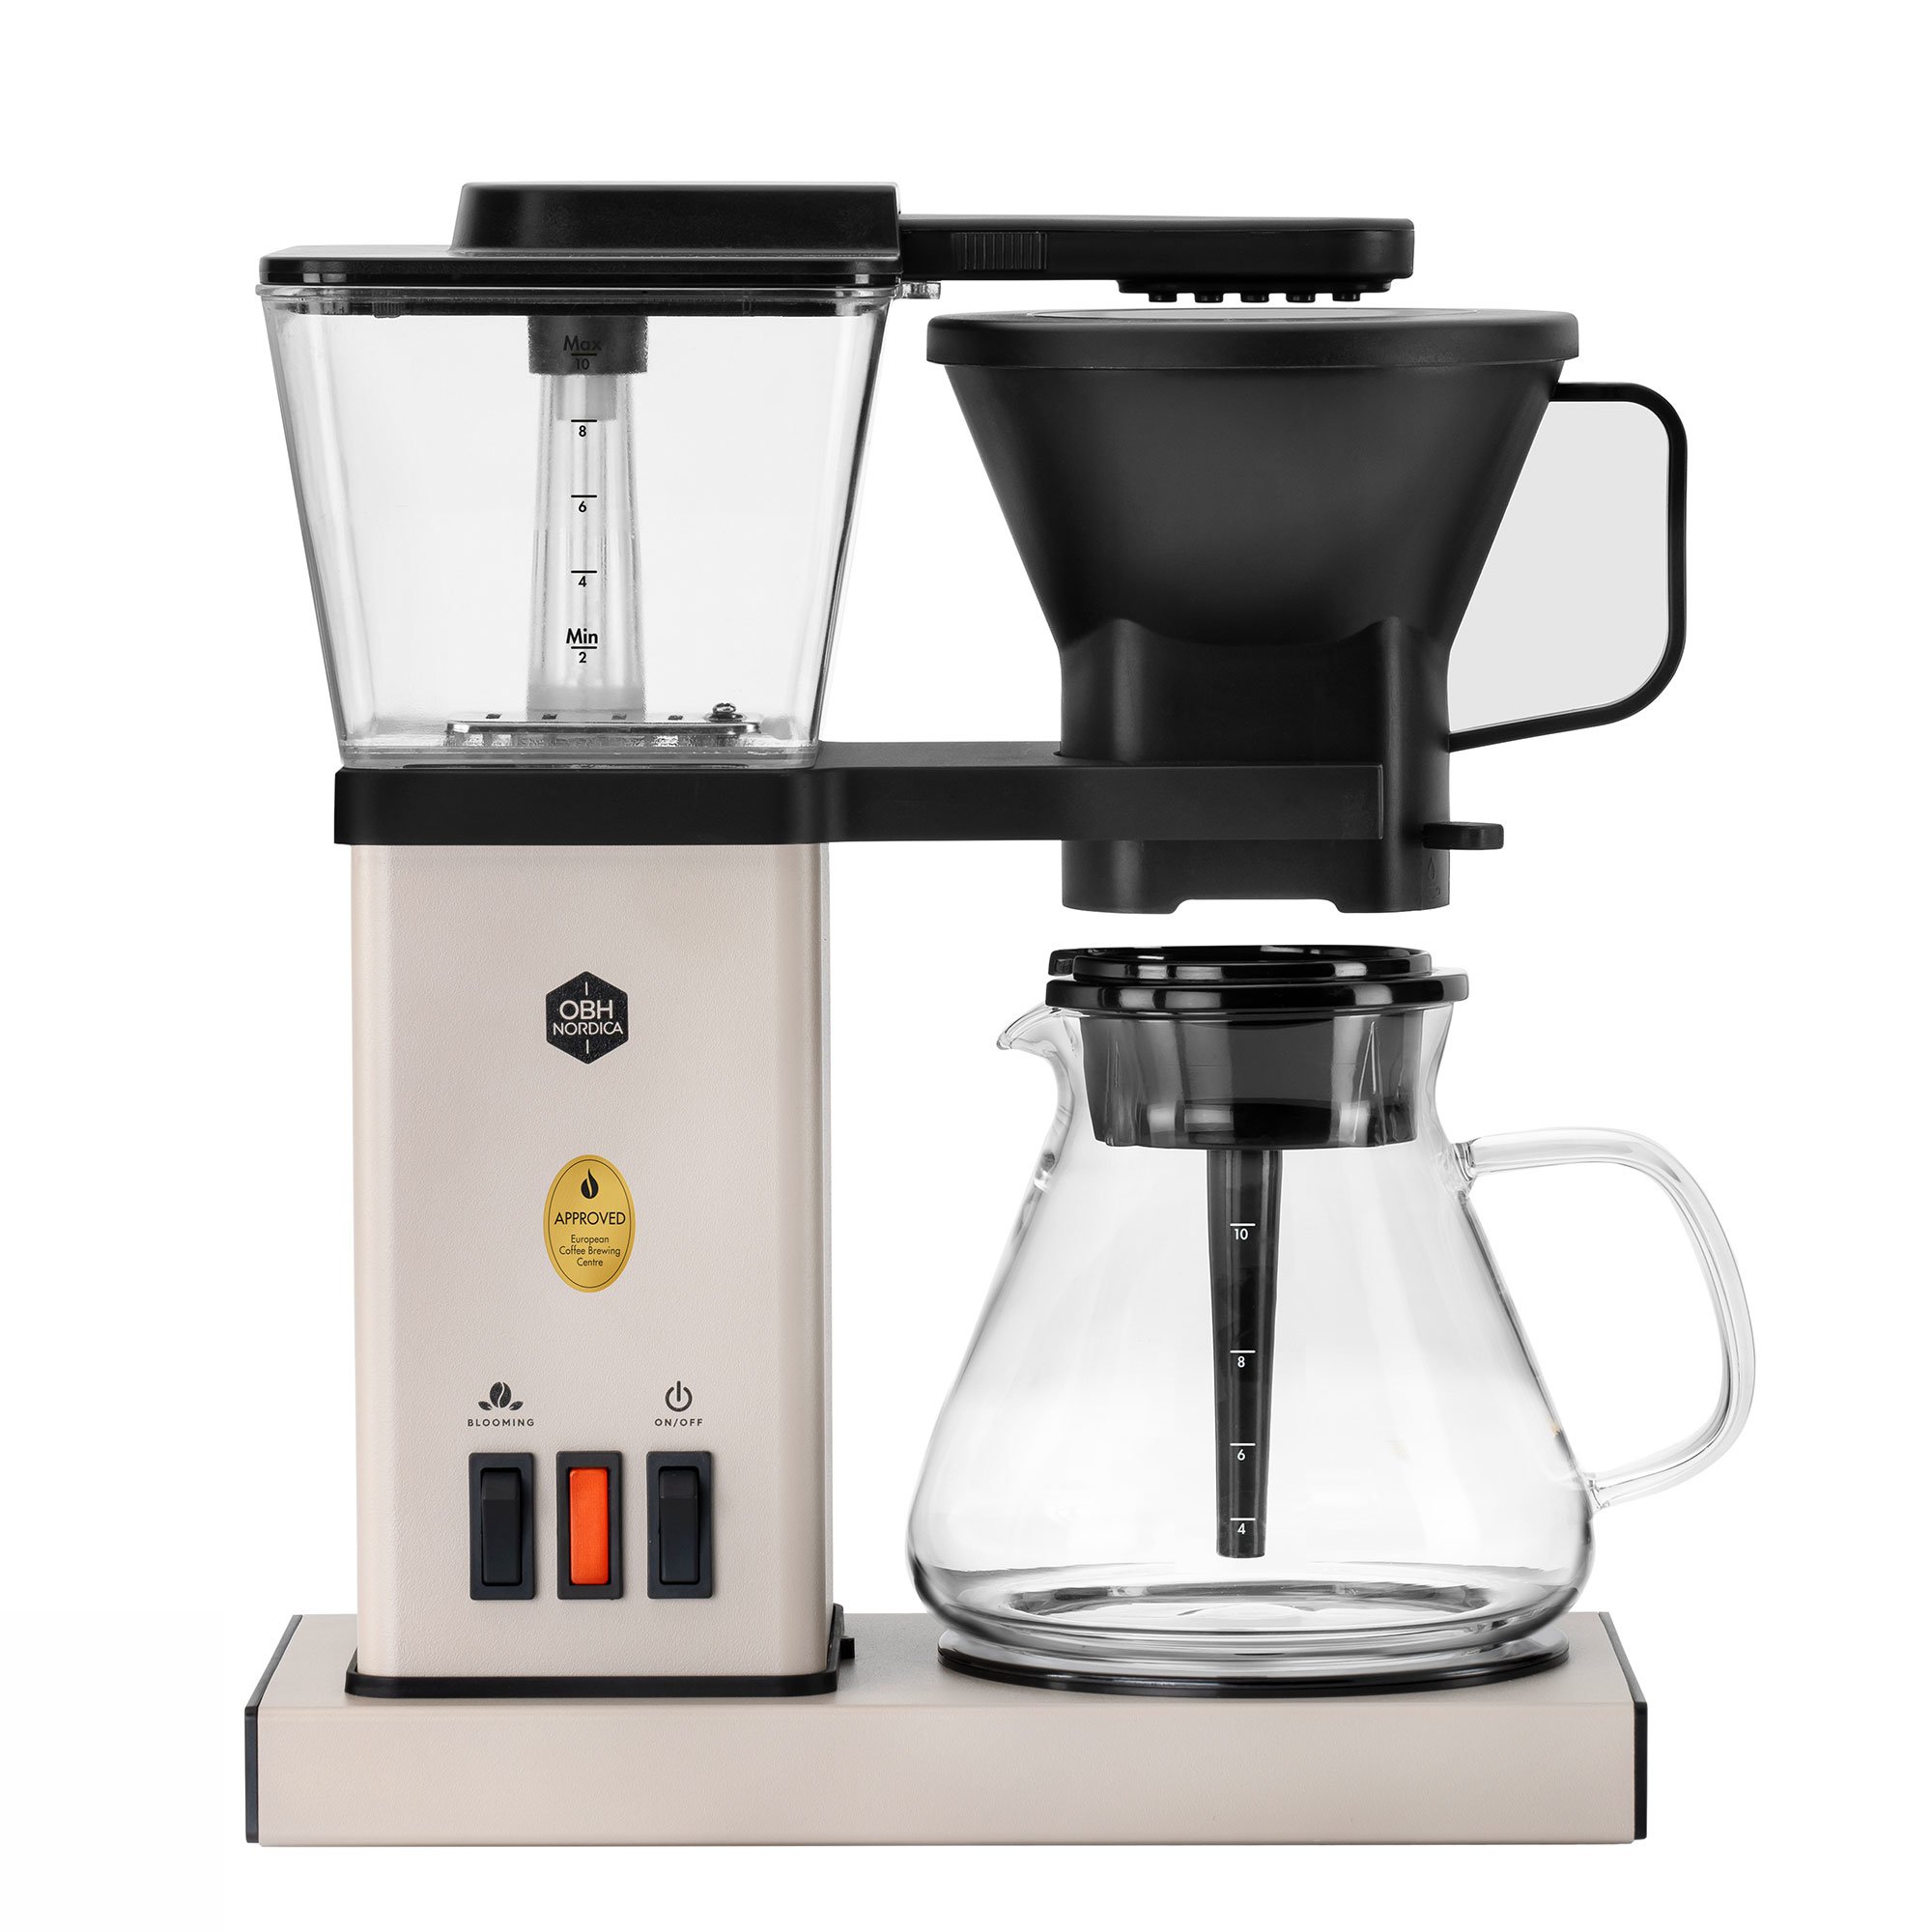 2: OBH Nordica Blooming Prime kaffemaskine, sand